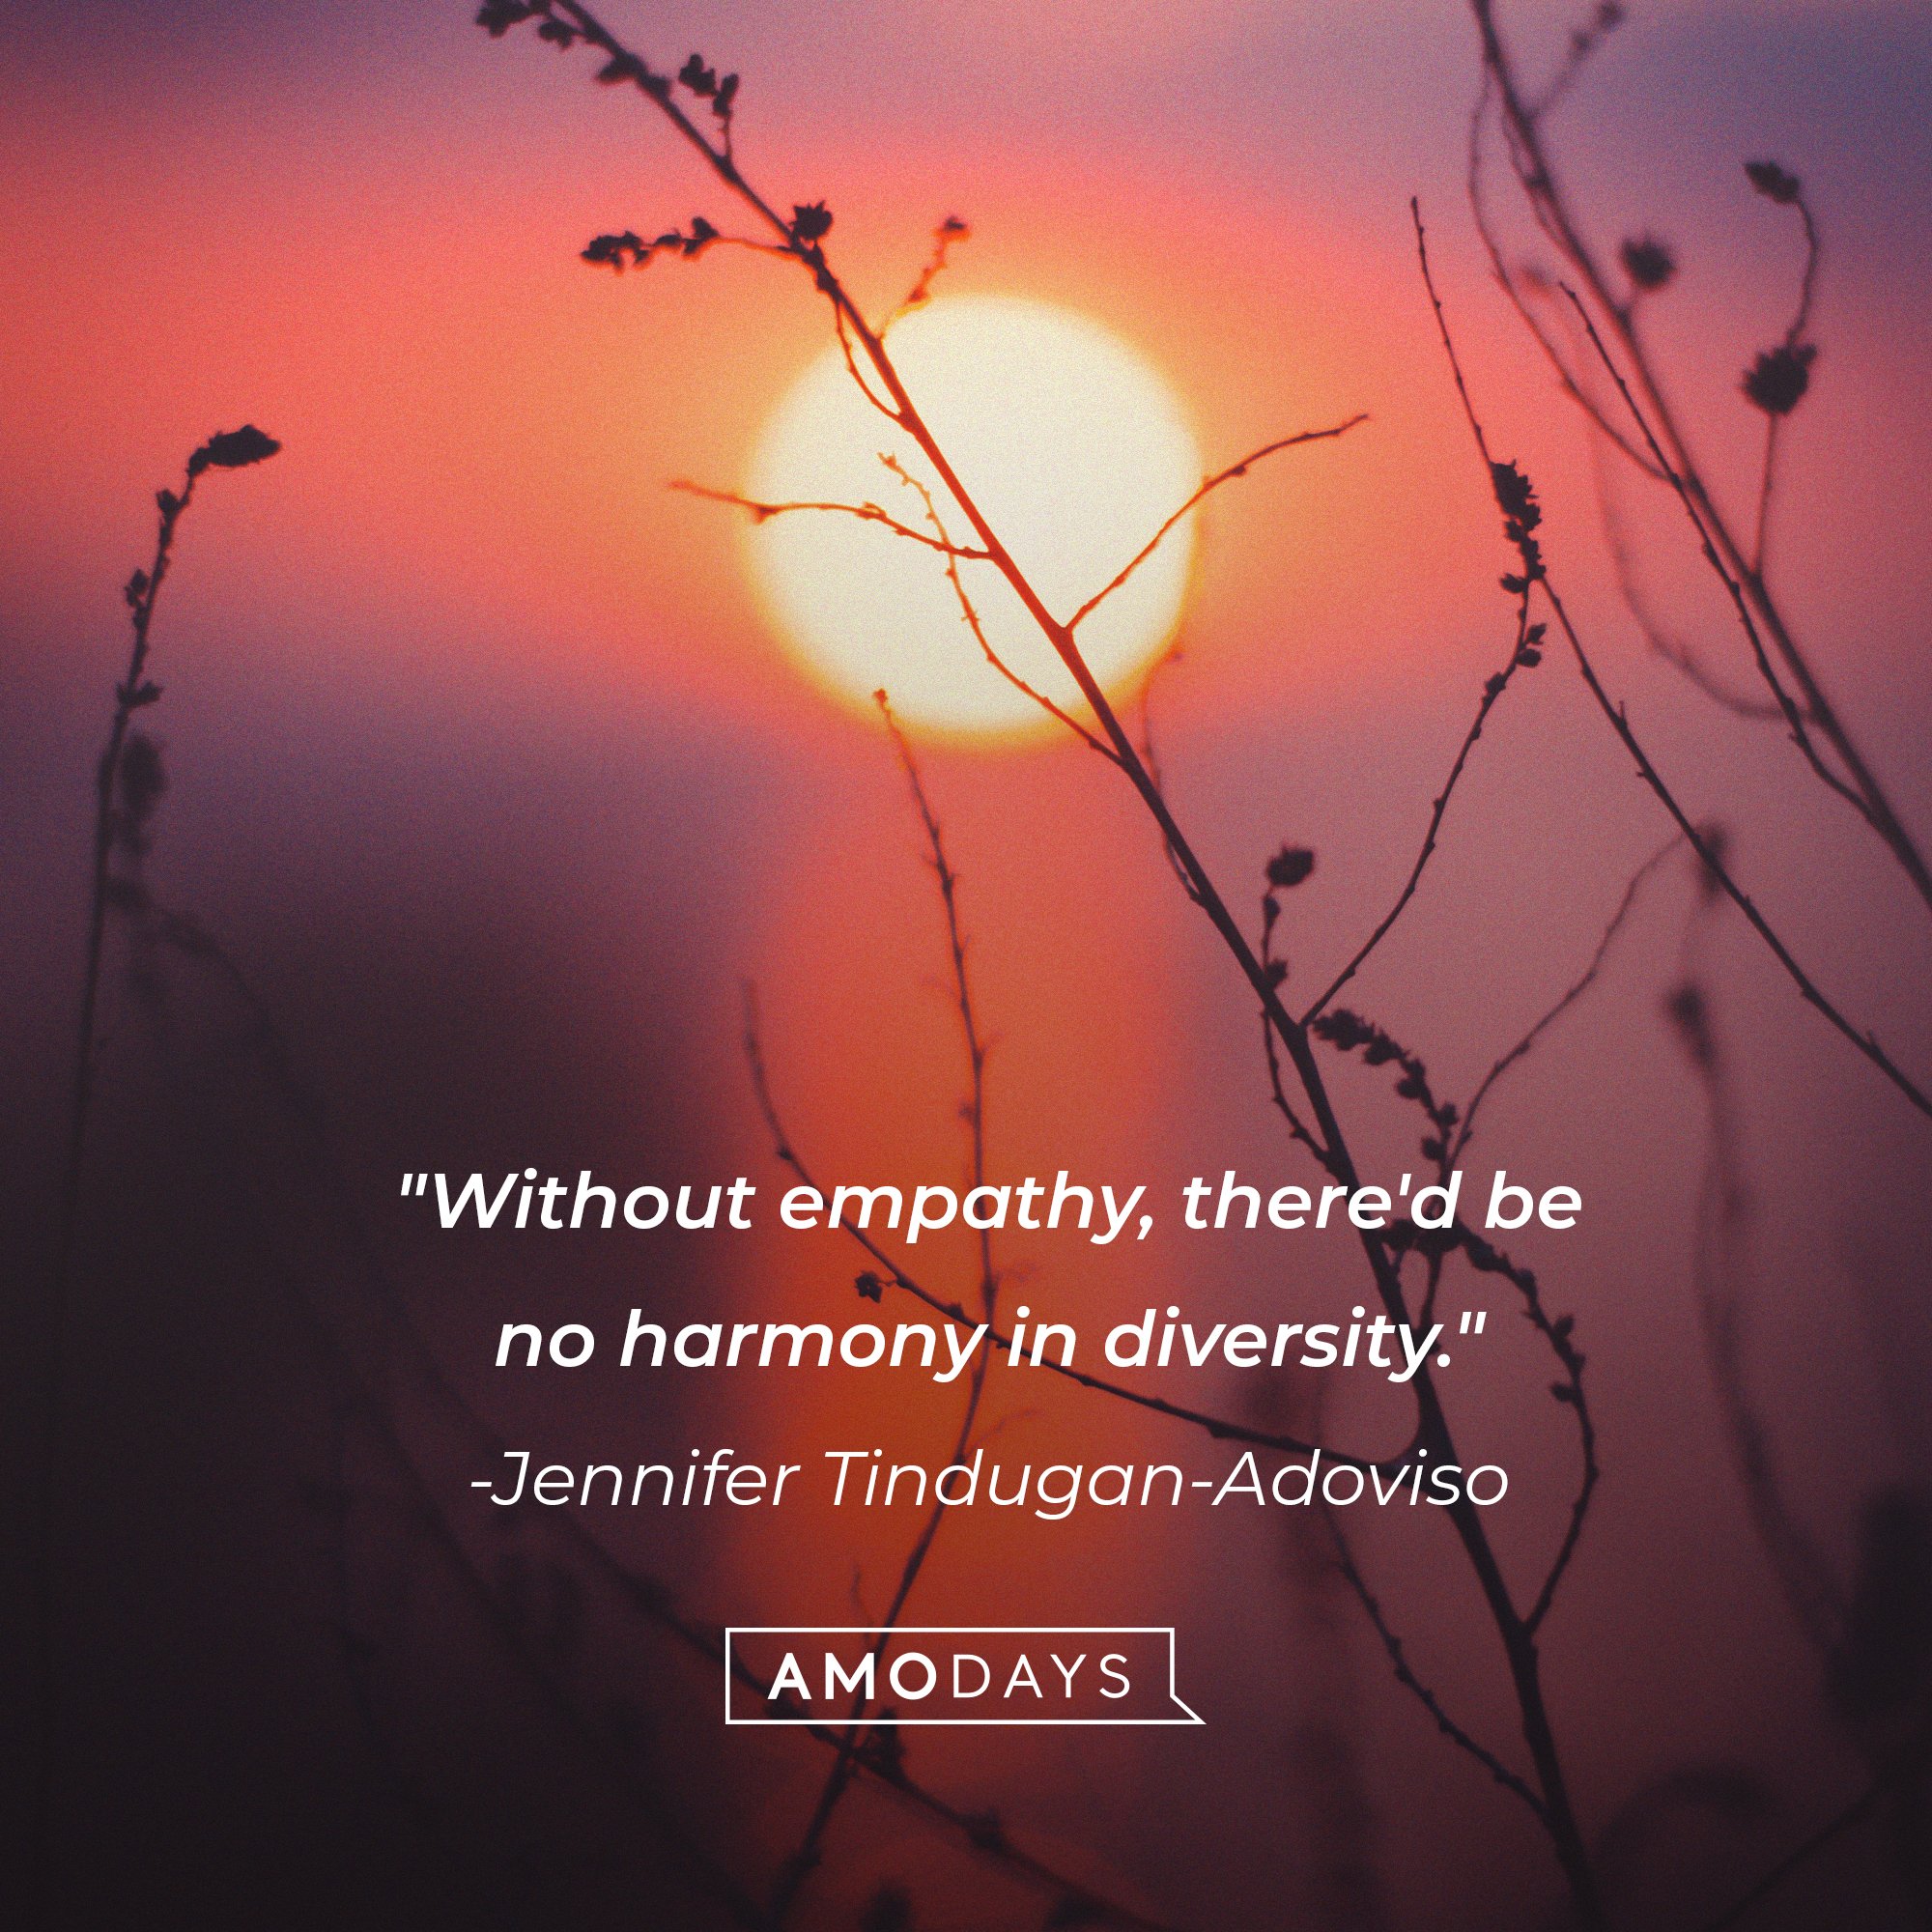 Jennifer Tindugan-Adoviso’s quote: "Without empathy, there'd be no harmony in diversity." | Image: AmoDays